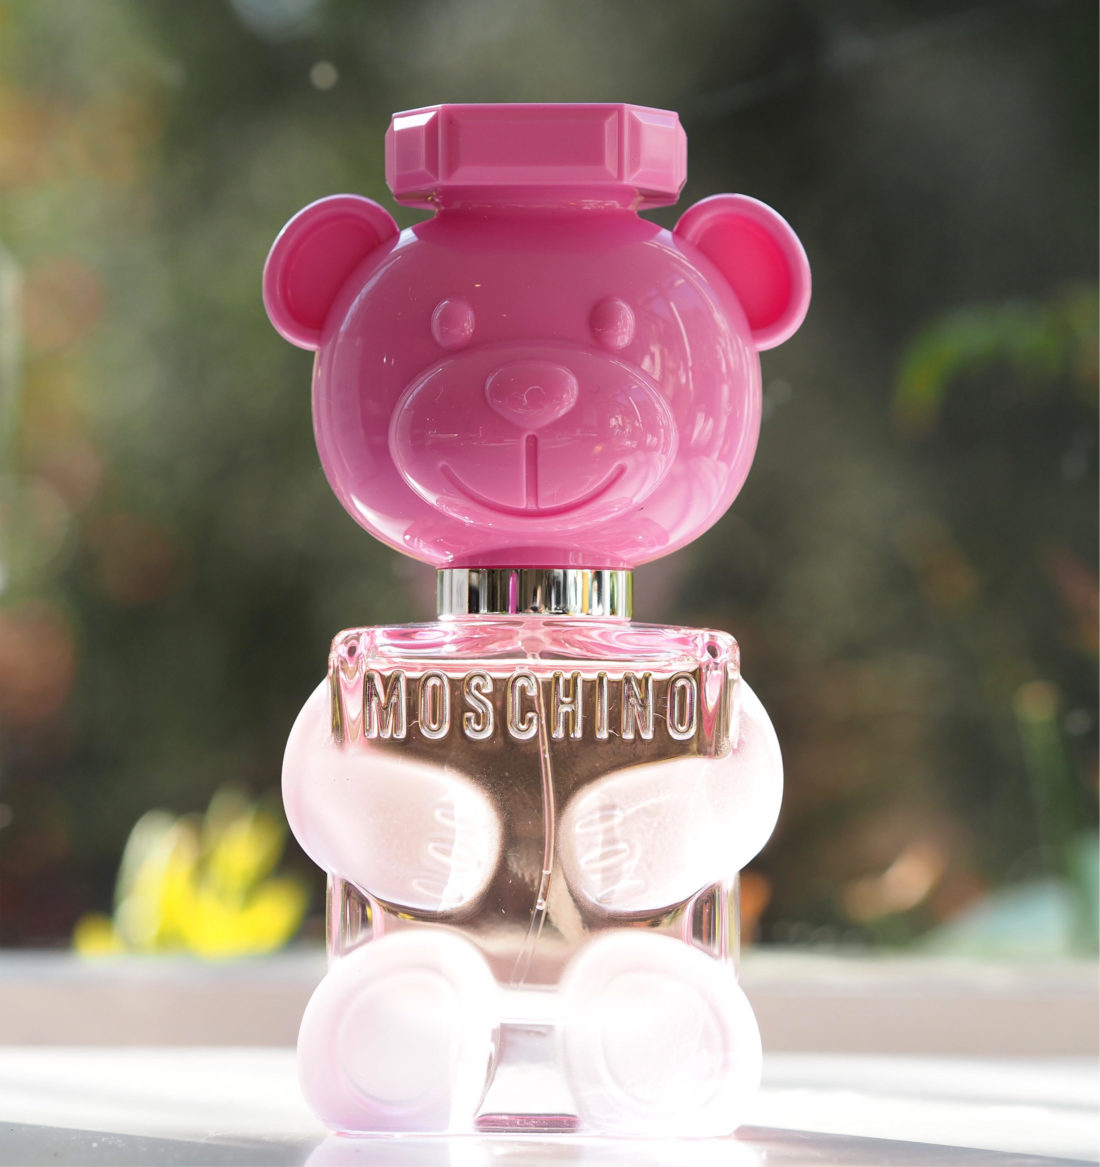 halen browser betreuren Moschino Toy 2 Bubble Gum | British Beauty Blogger